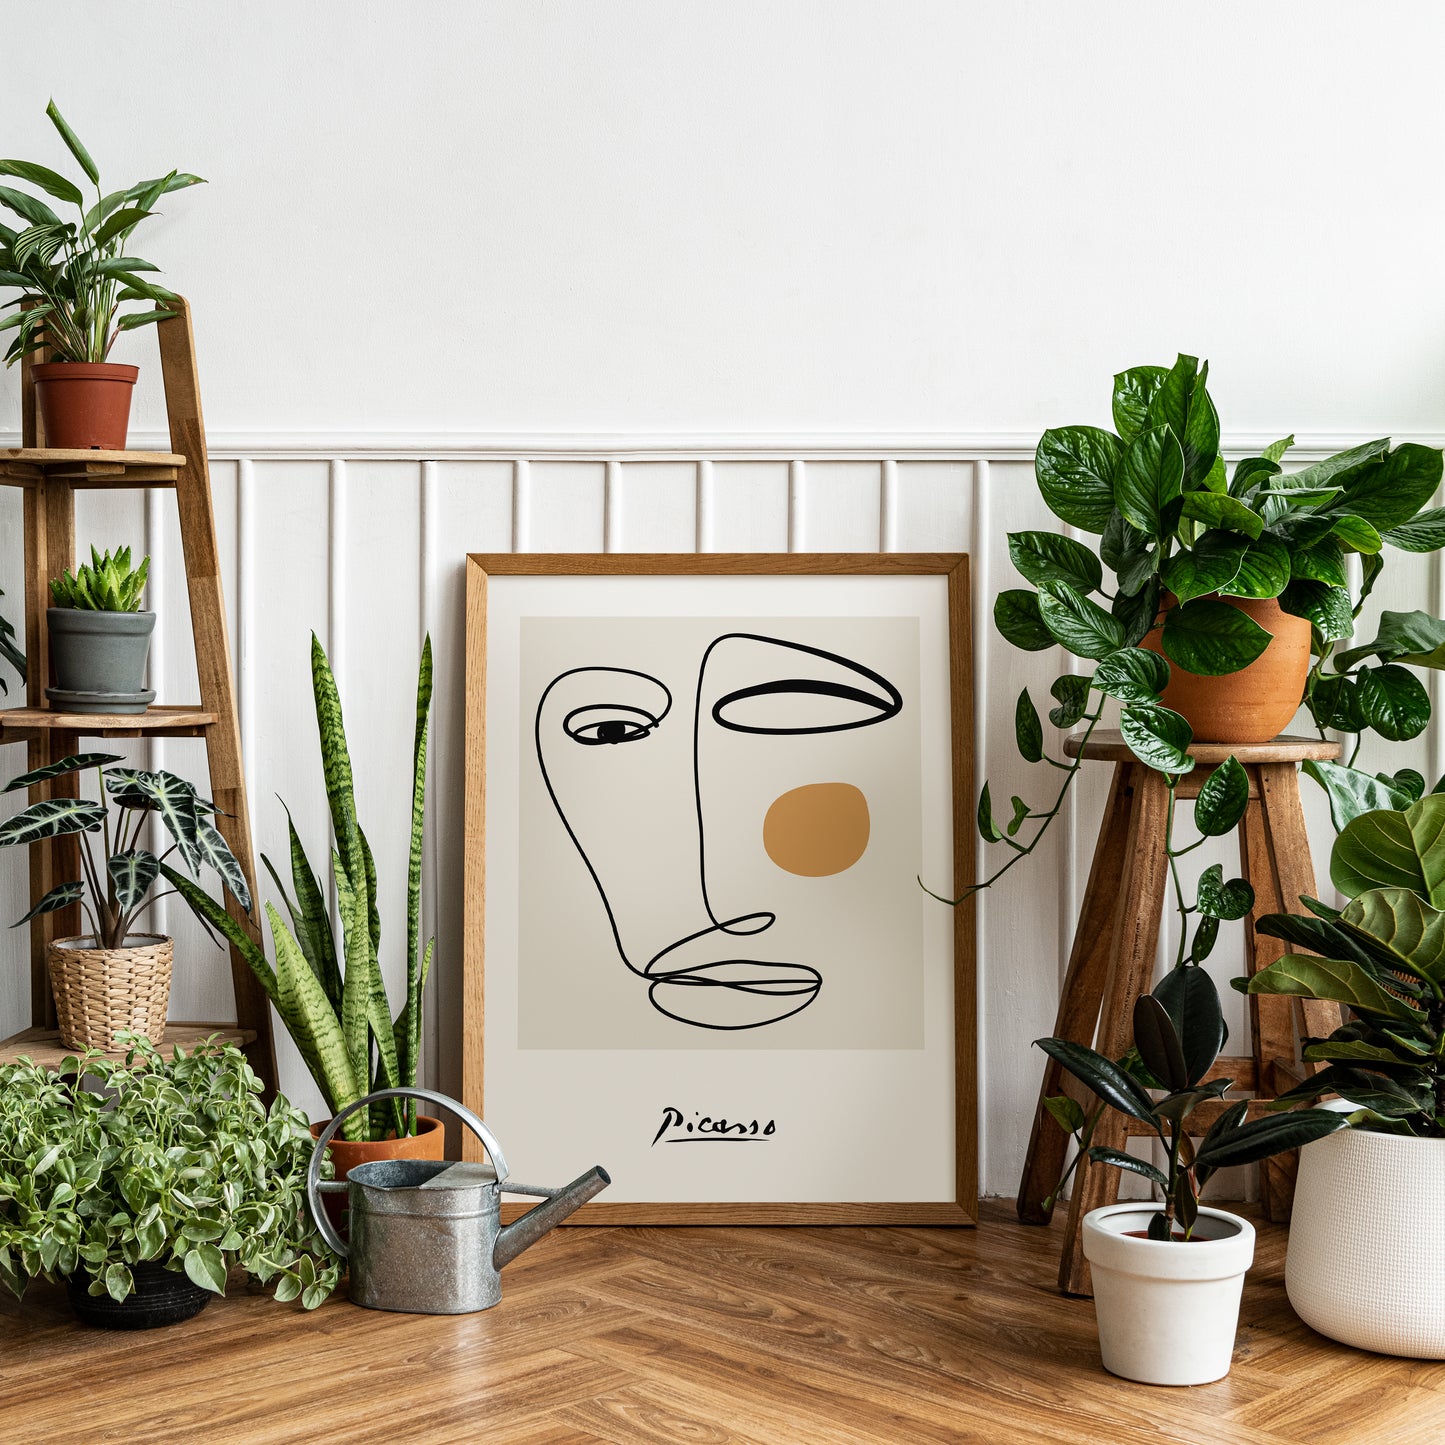 Pablo Picasso Poster